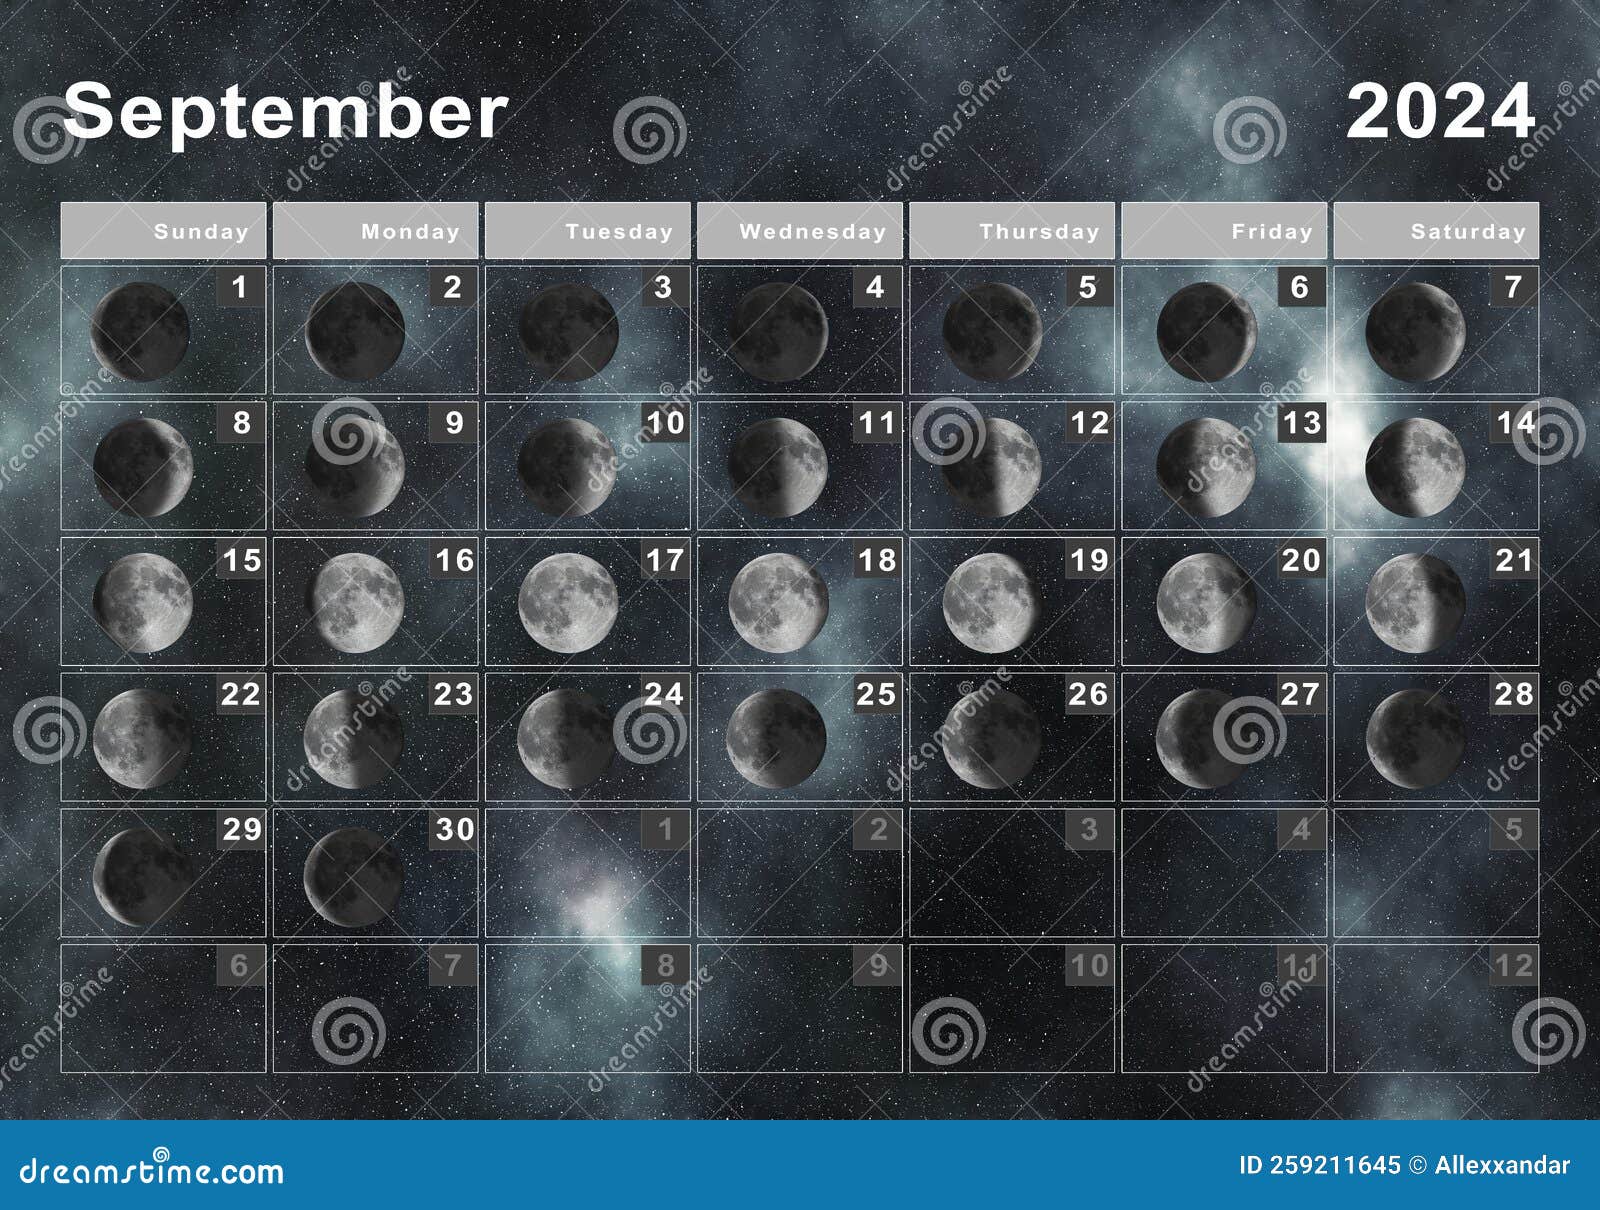 September 2024 Lunar Calendar, Moon Cycles RoyaltyFree Stock